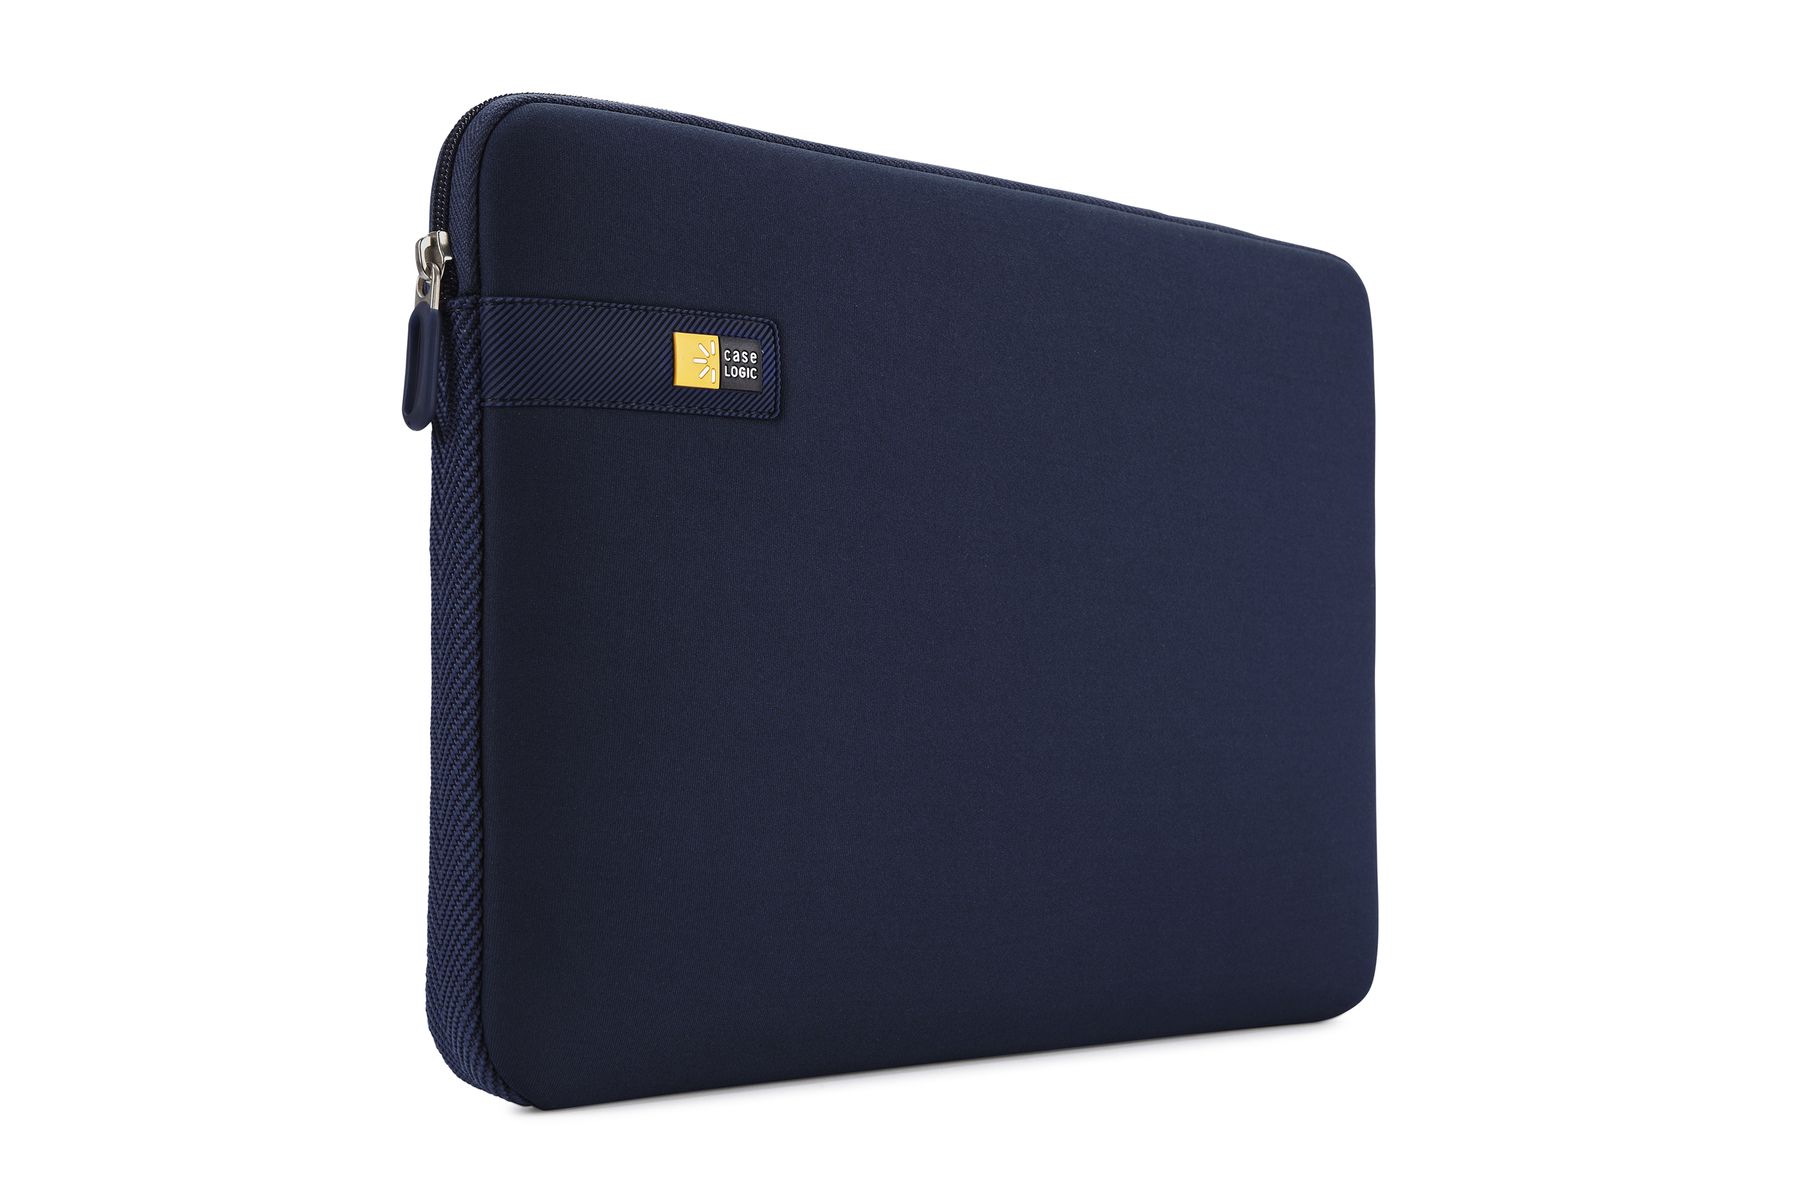 Case Logic 13.3" Laptop and MacBook Sleeve Dark Blue